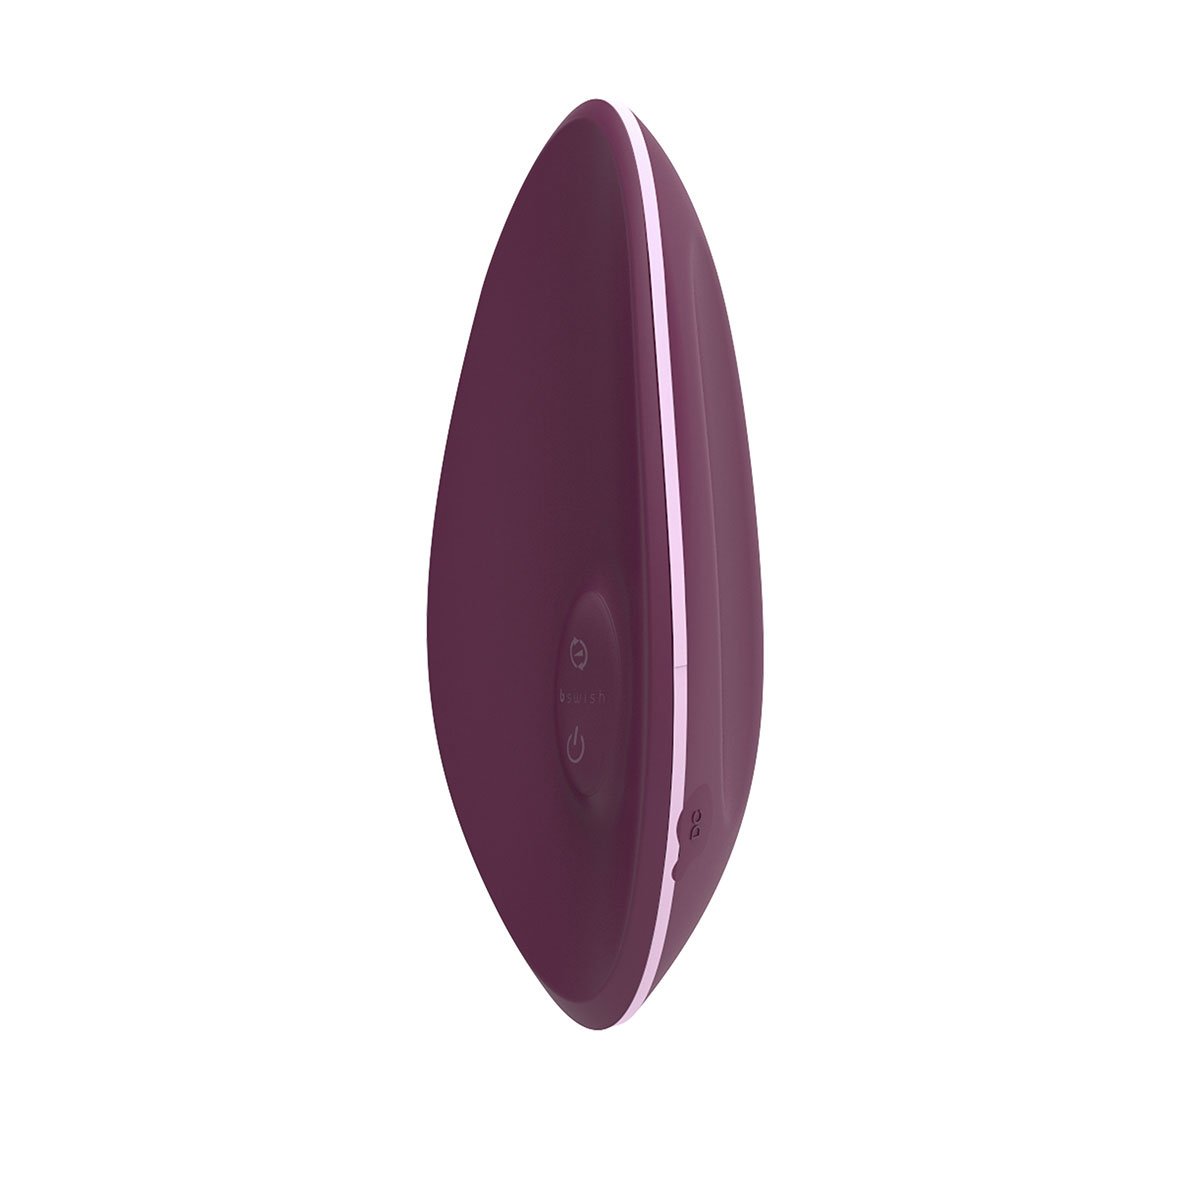 B Swish BSoft Premium Vibrator - Burgundy and Pink - Sex Toys